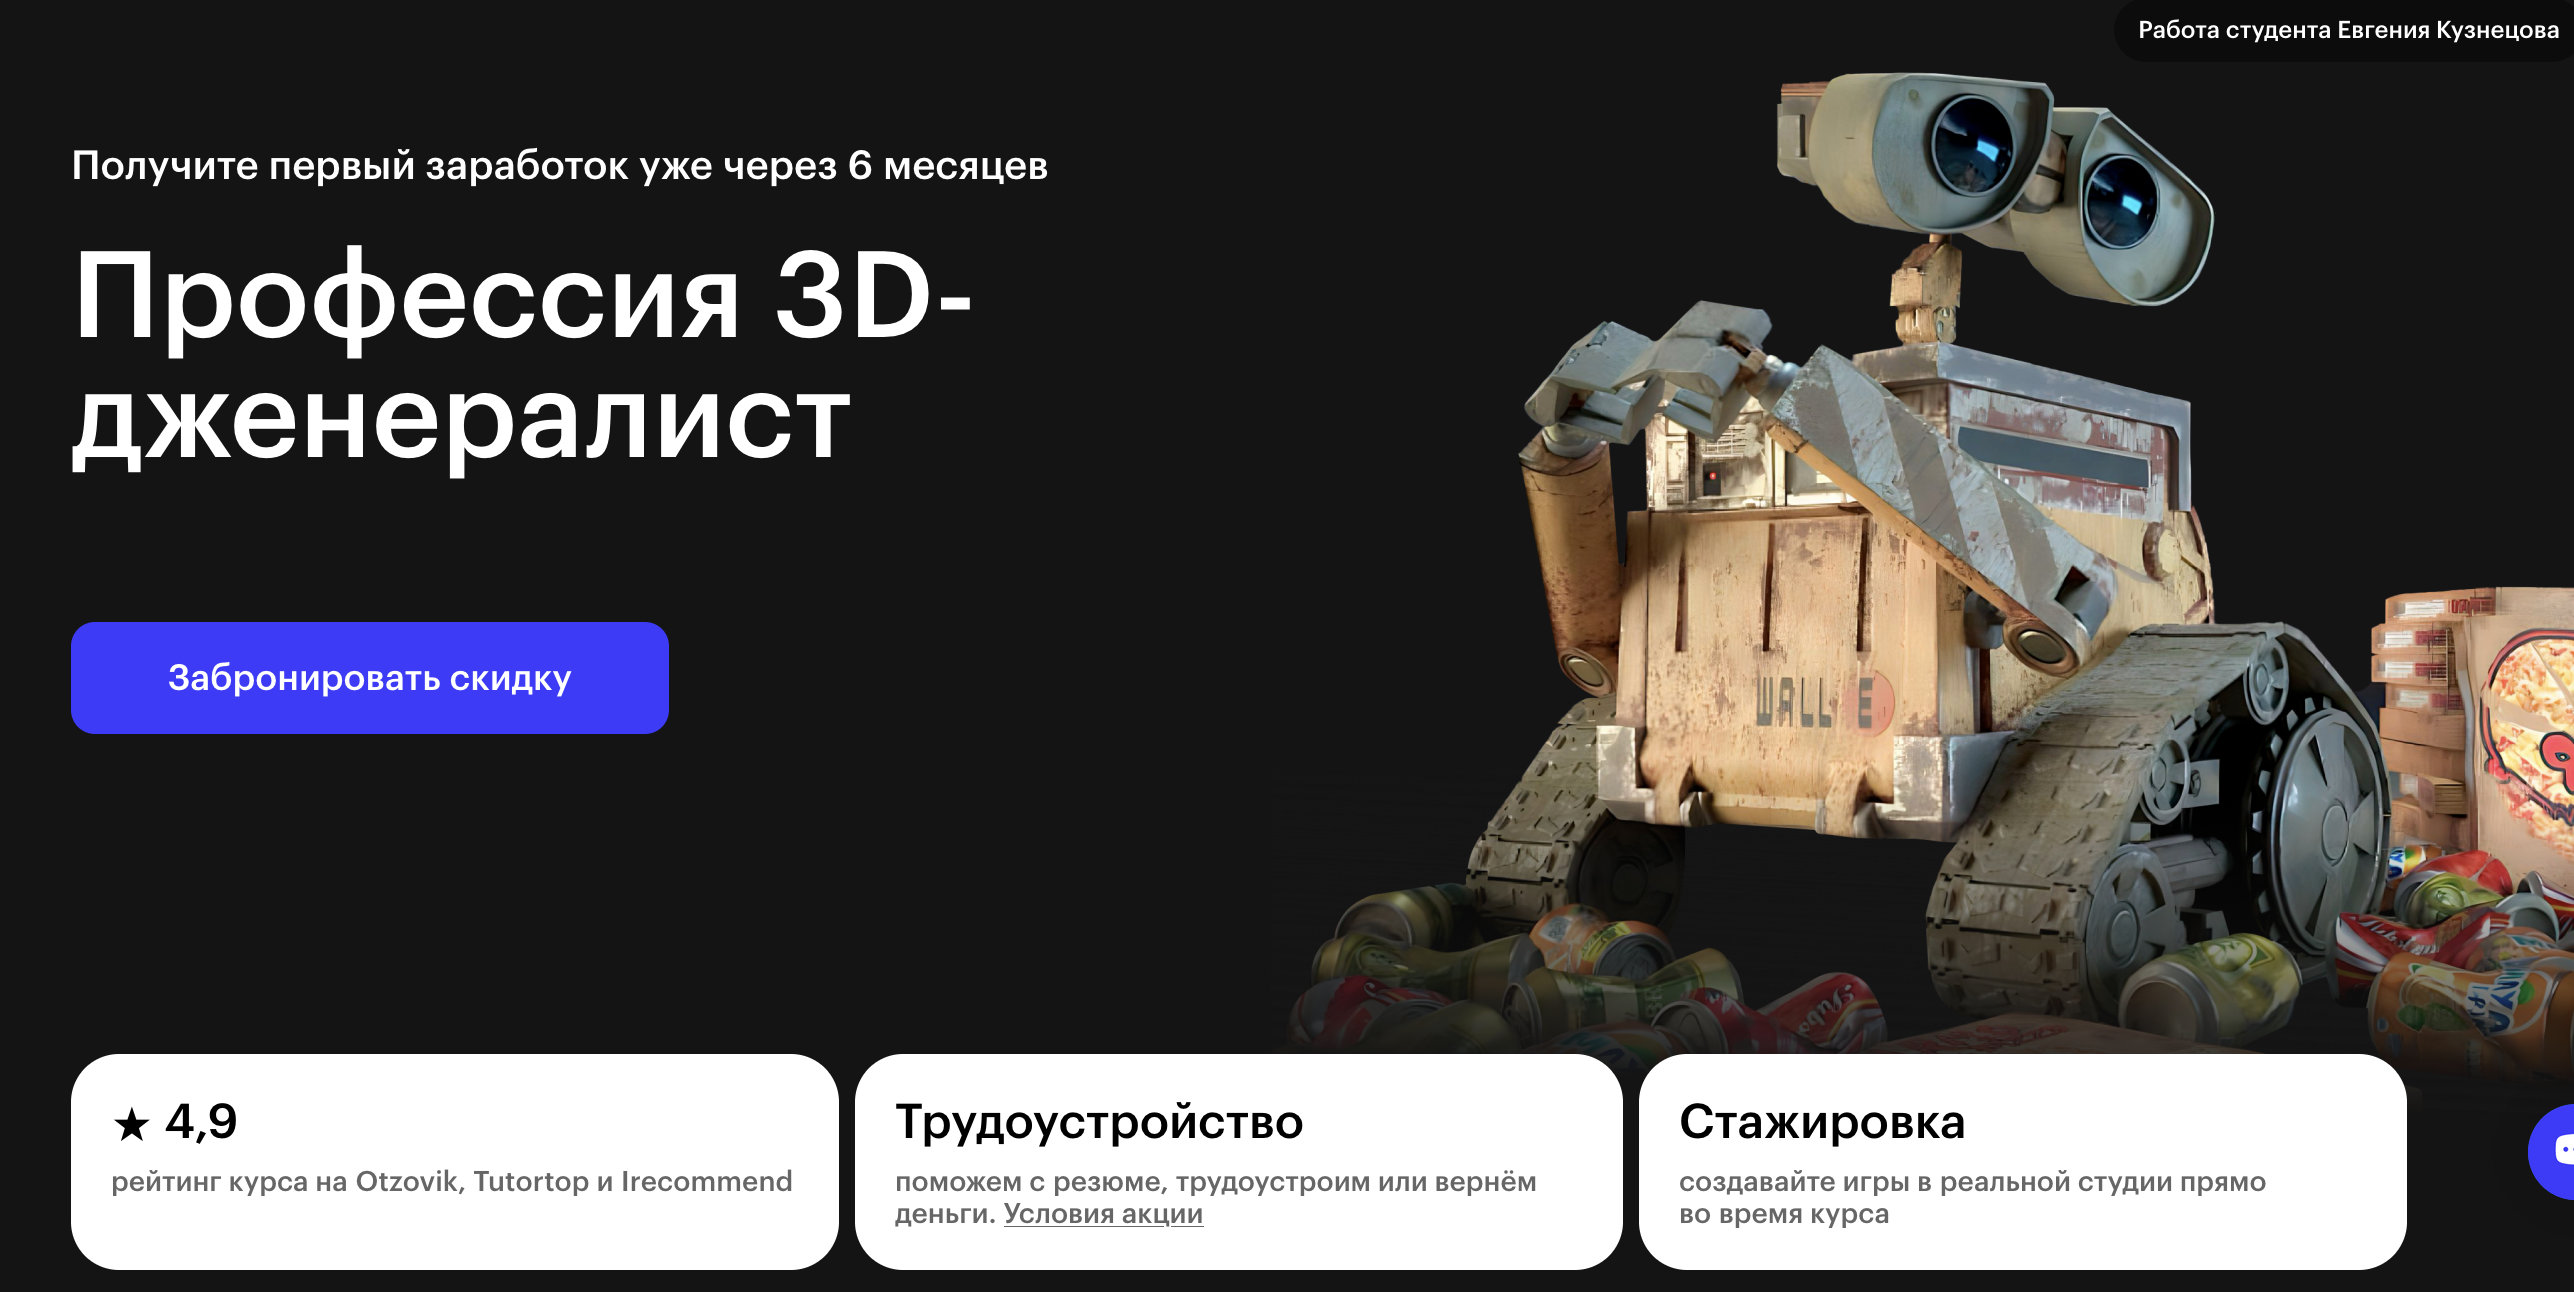 Skillbox: Профессия 3D-дженералист